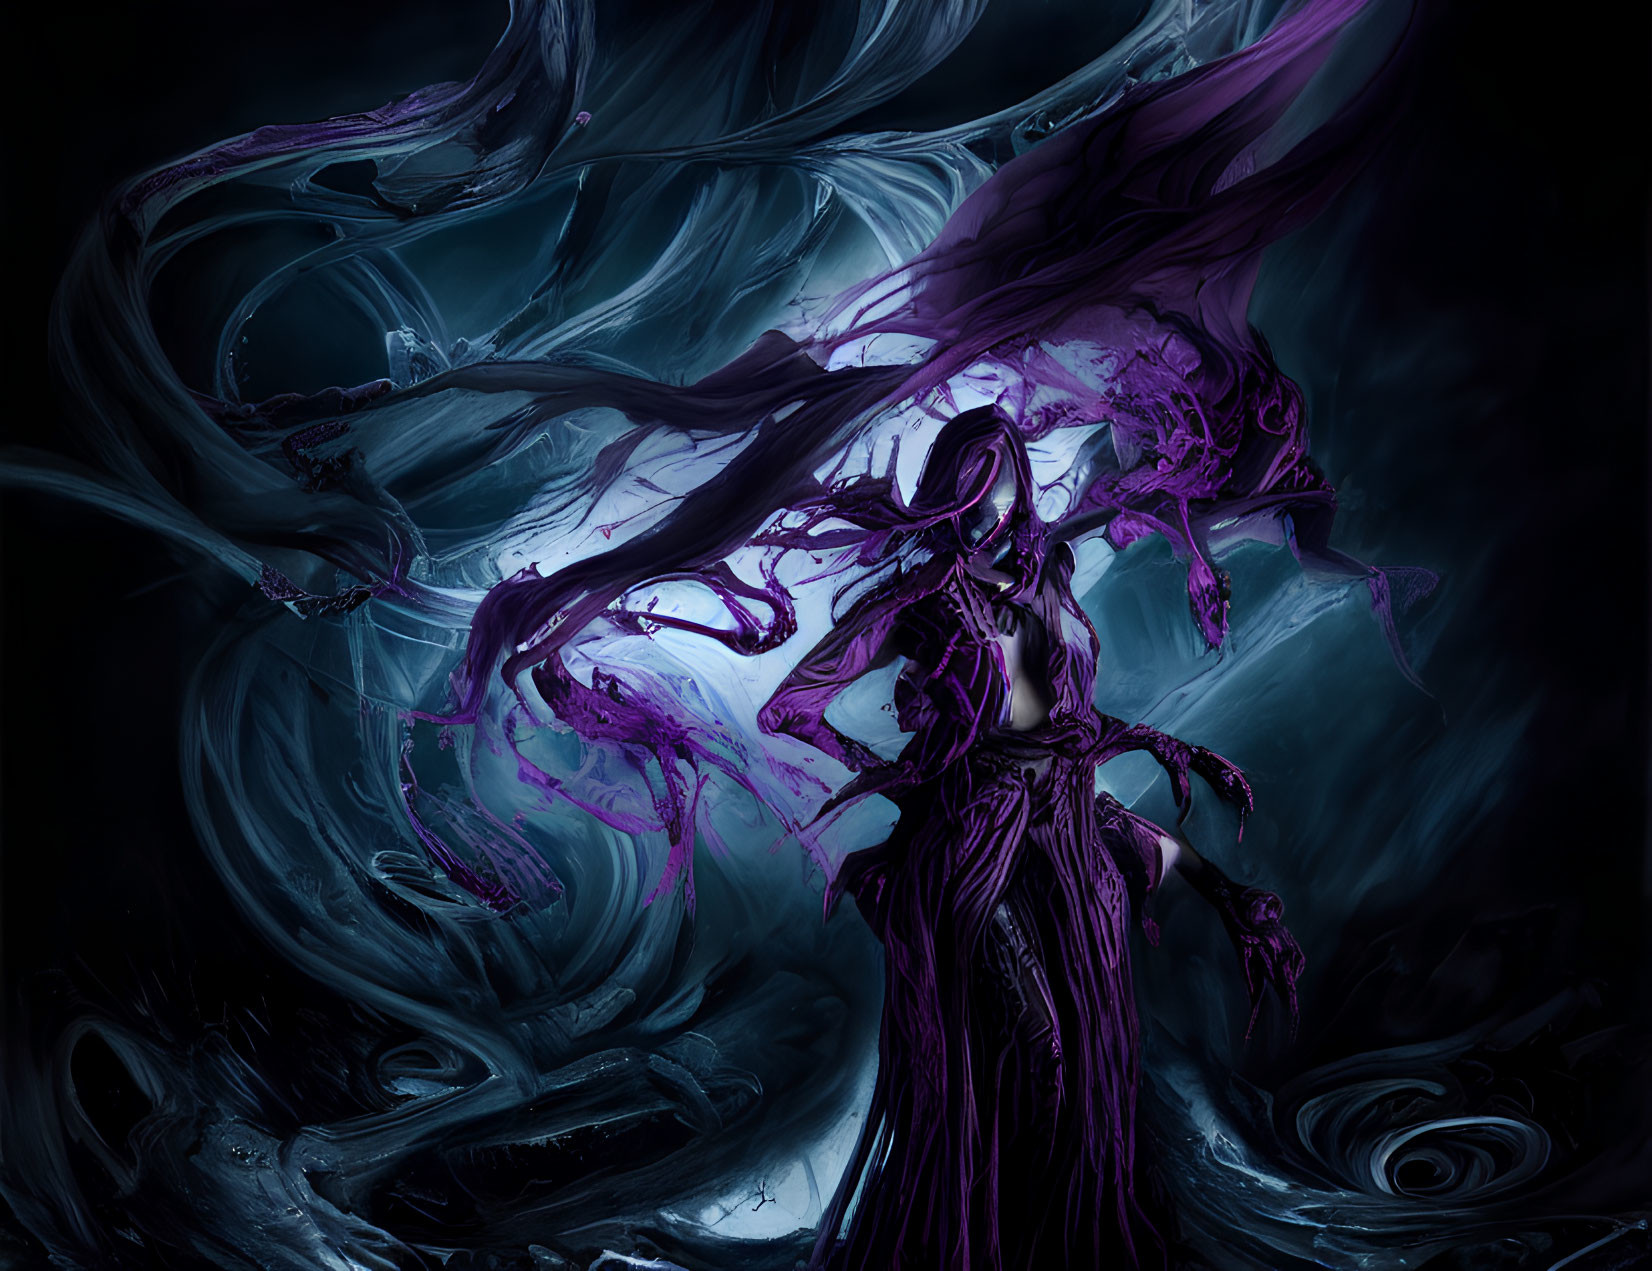 Abstract art piece: Dark blue and purple swirls with blending figure